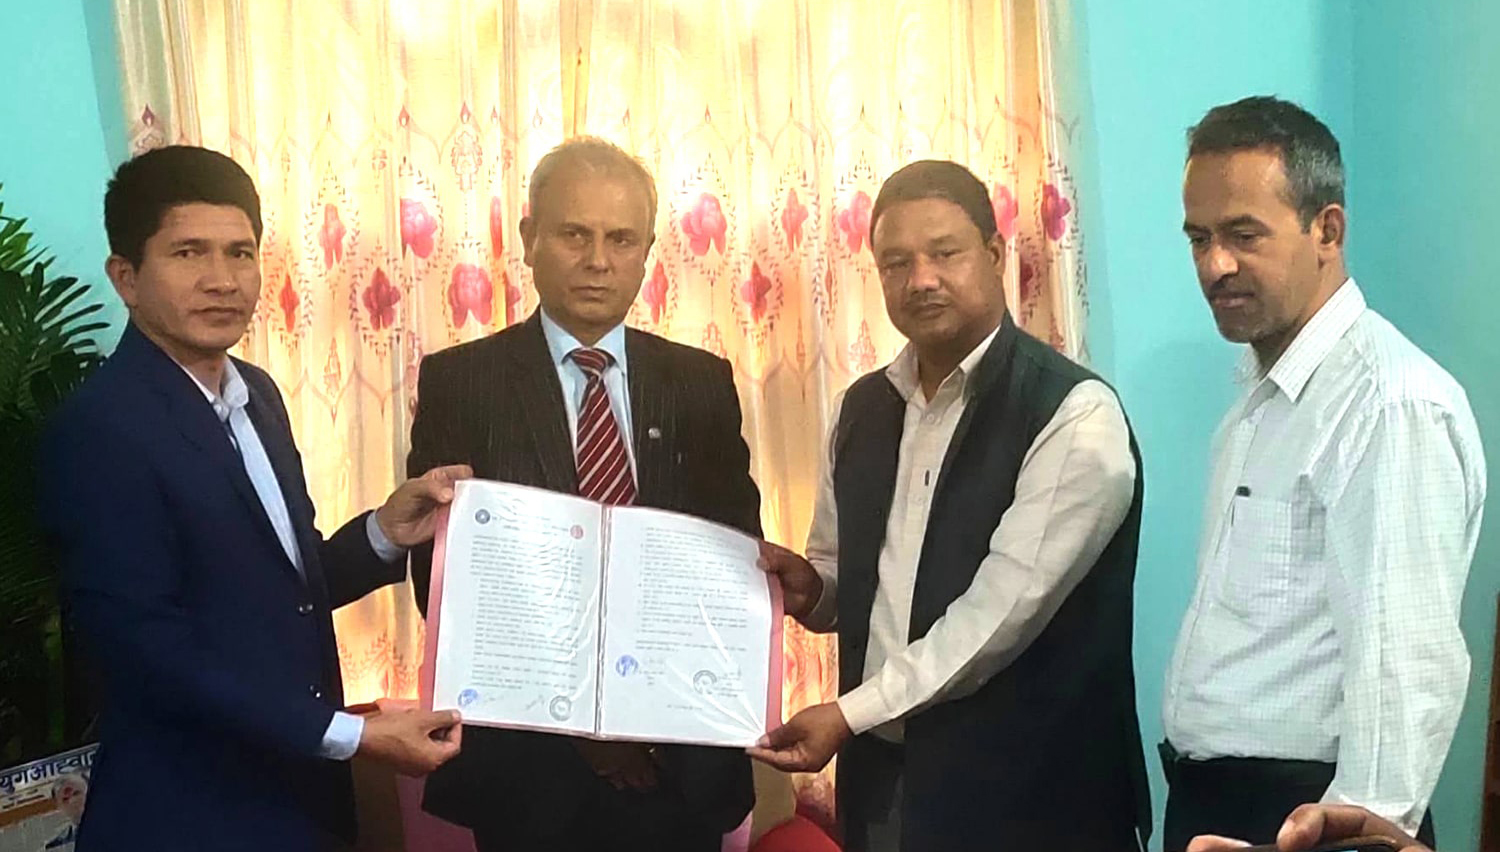 मध्यपश्चिमाञ्चल विश्वविद्यालय स्कुल अफ म्यानेजमेन्ट र नेपाल उद्योग वाणिज्य महासंघ कर्णाली प्रदेशबीच सम्झौता 